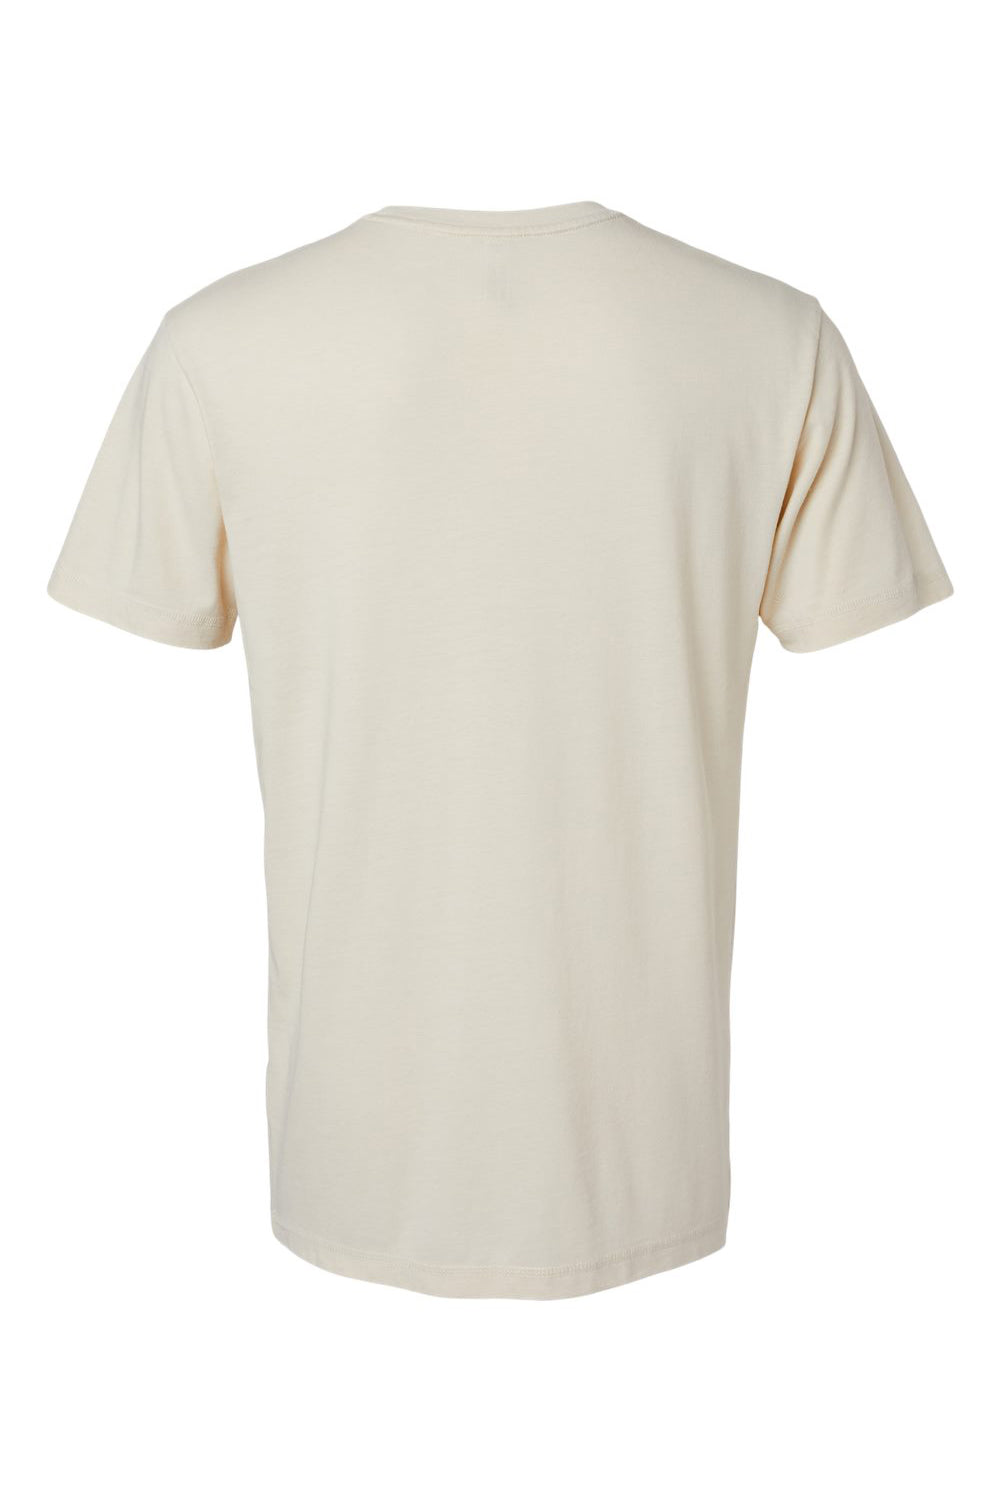 LAT 6902 Mens Vintage Wash Short Sleeve Crewneck T-Shirt Natural Flat Back